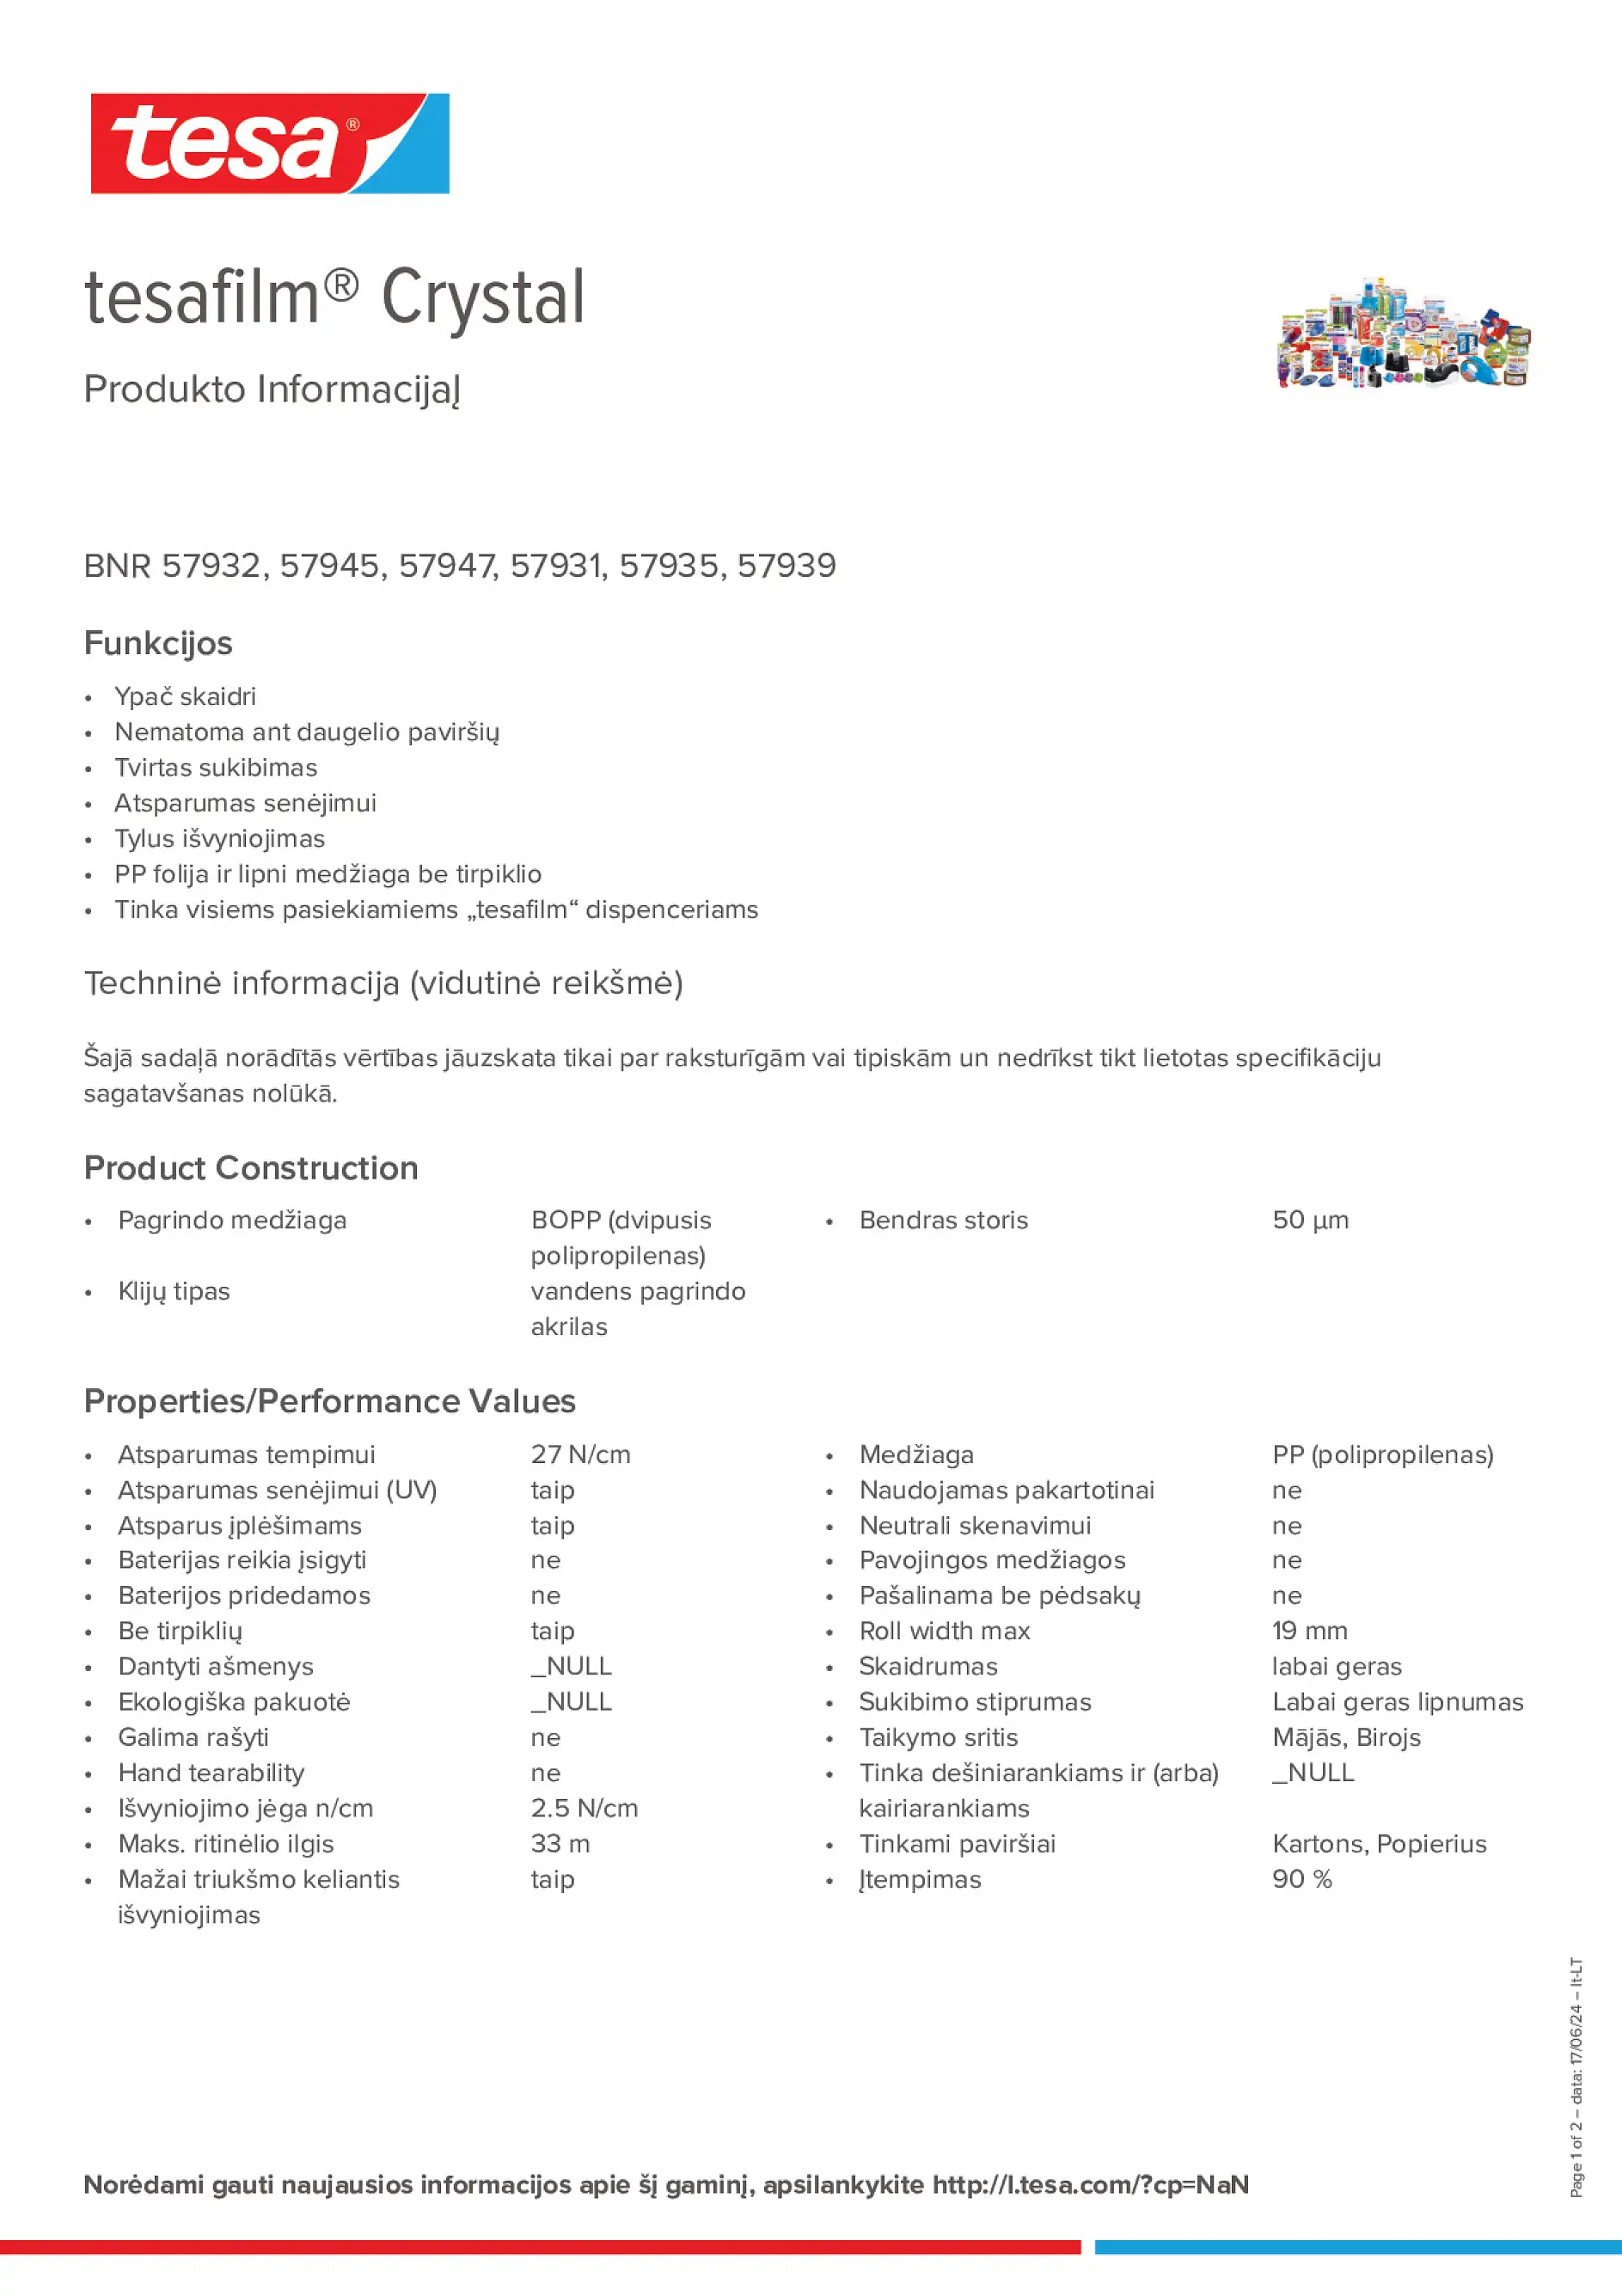 Product information_tesafilm® 57928_lt-LT